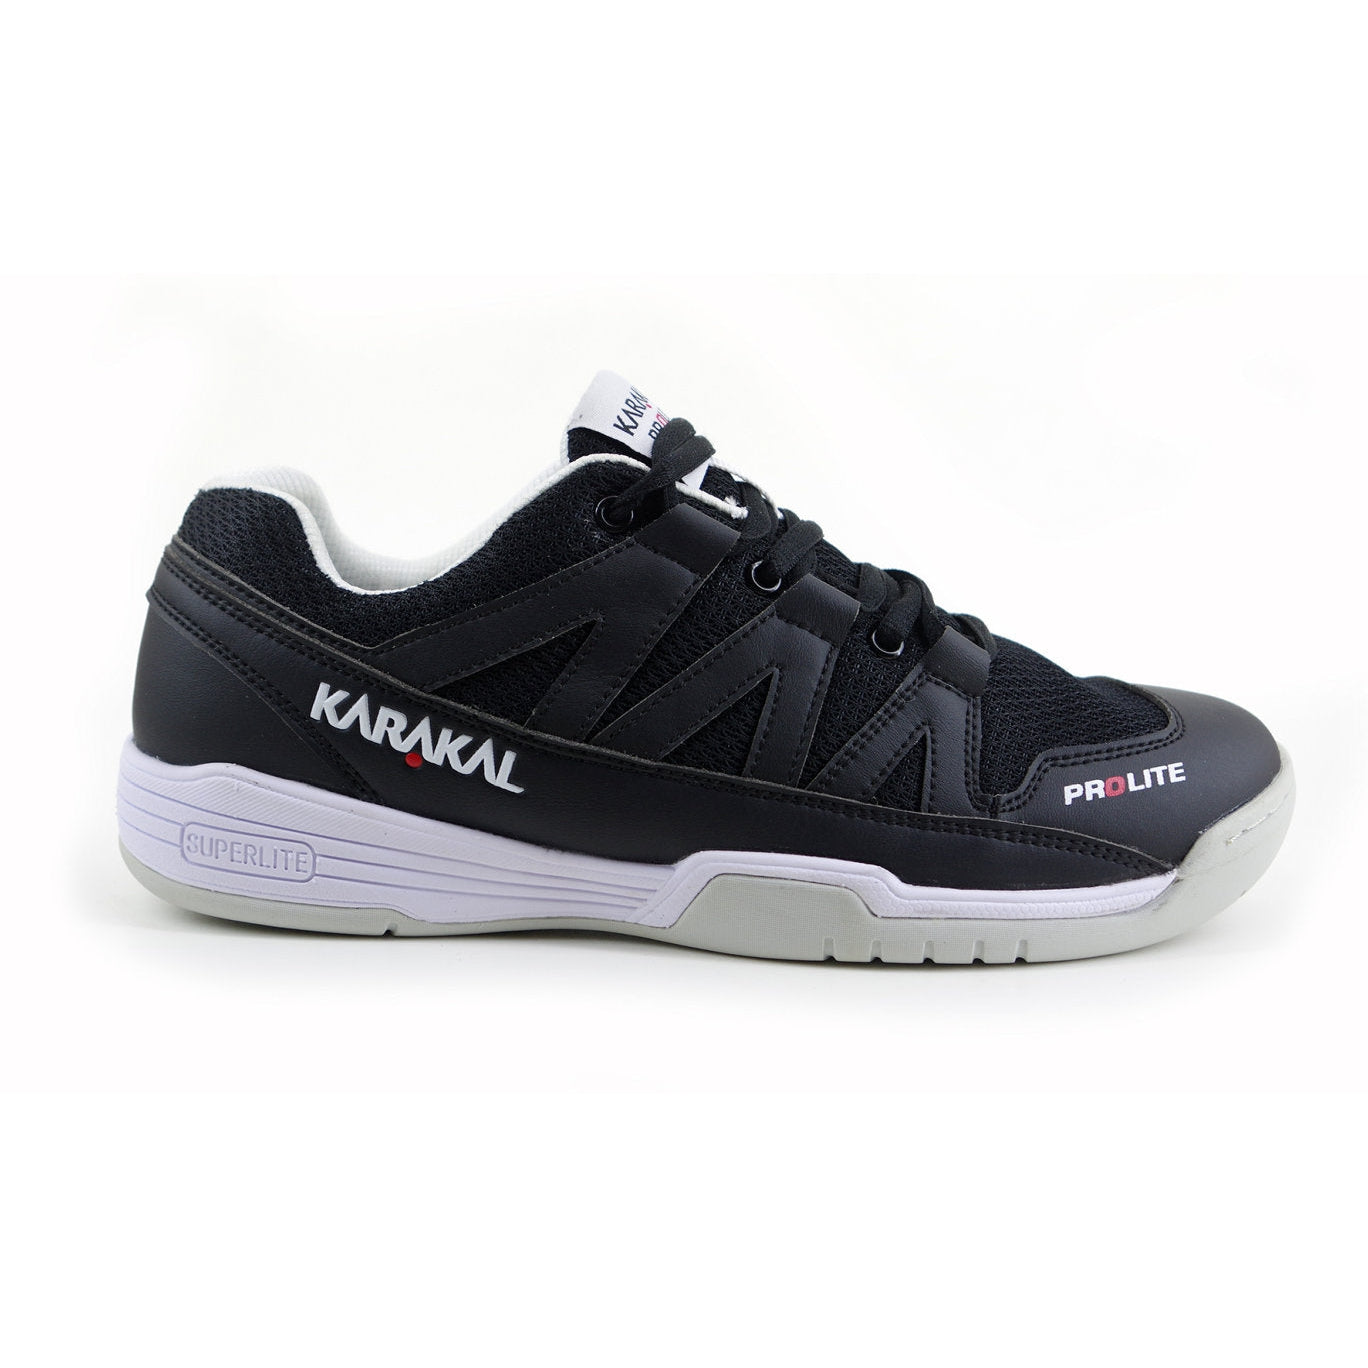 Karakal (Kf950) Prolite Court Shoe - Size 42